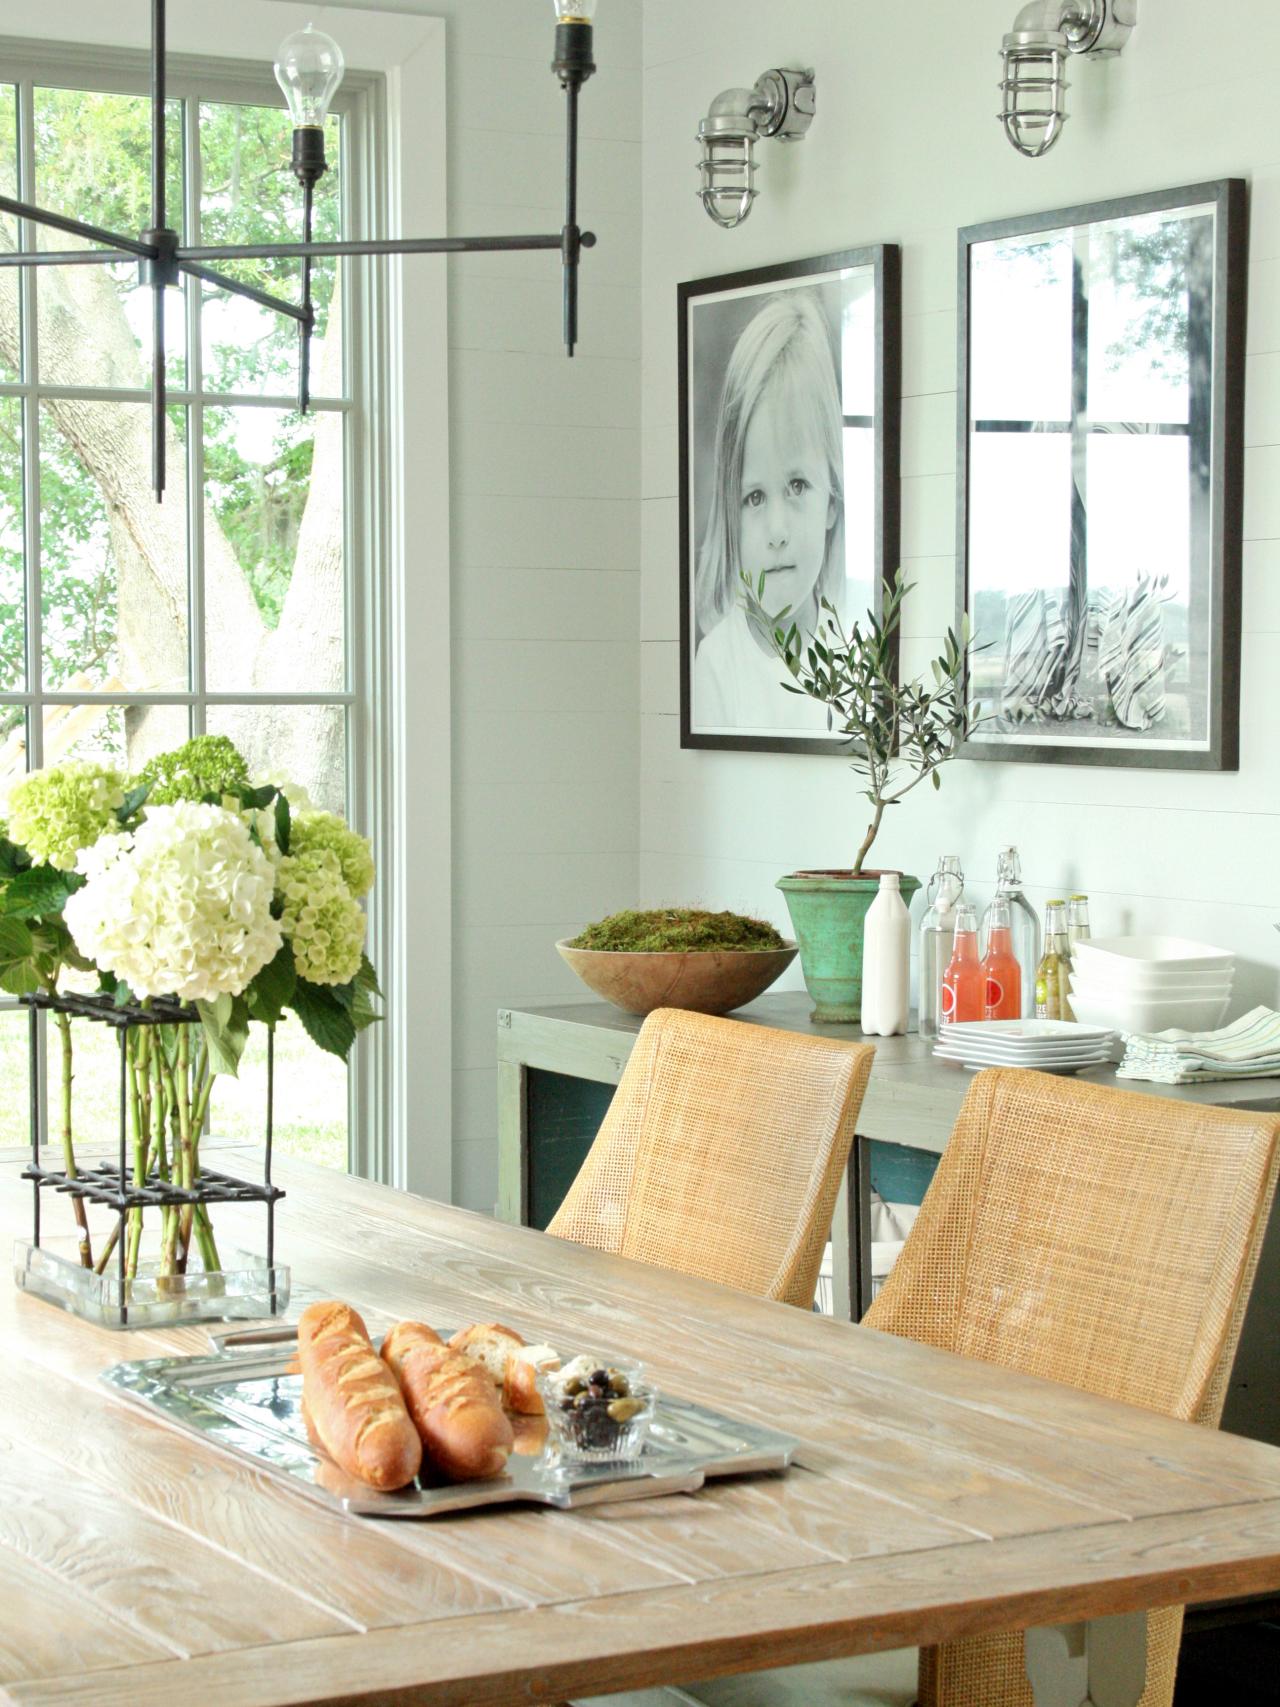 15 Ways To Dress Up Your Dining Room Walls Hgtv S Decorating Design Blog Hgtv